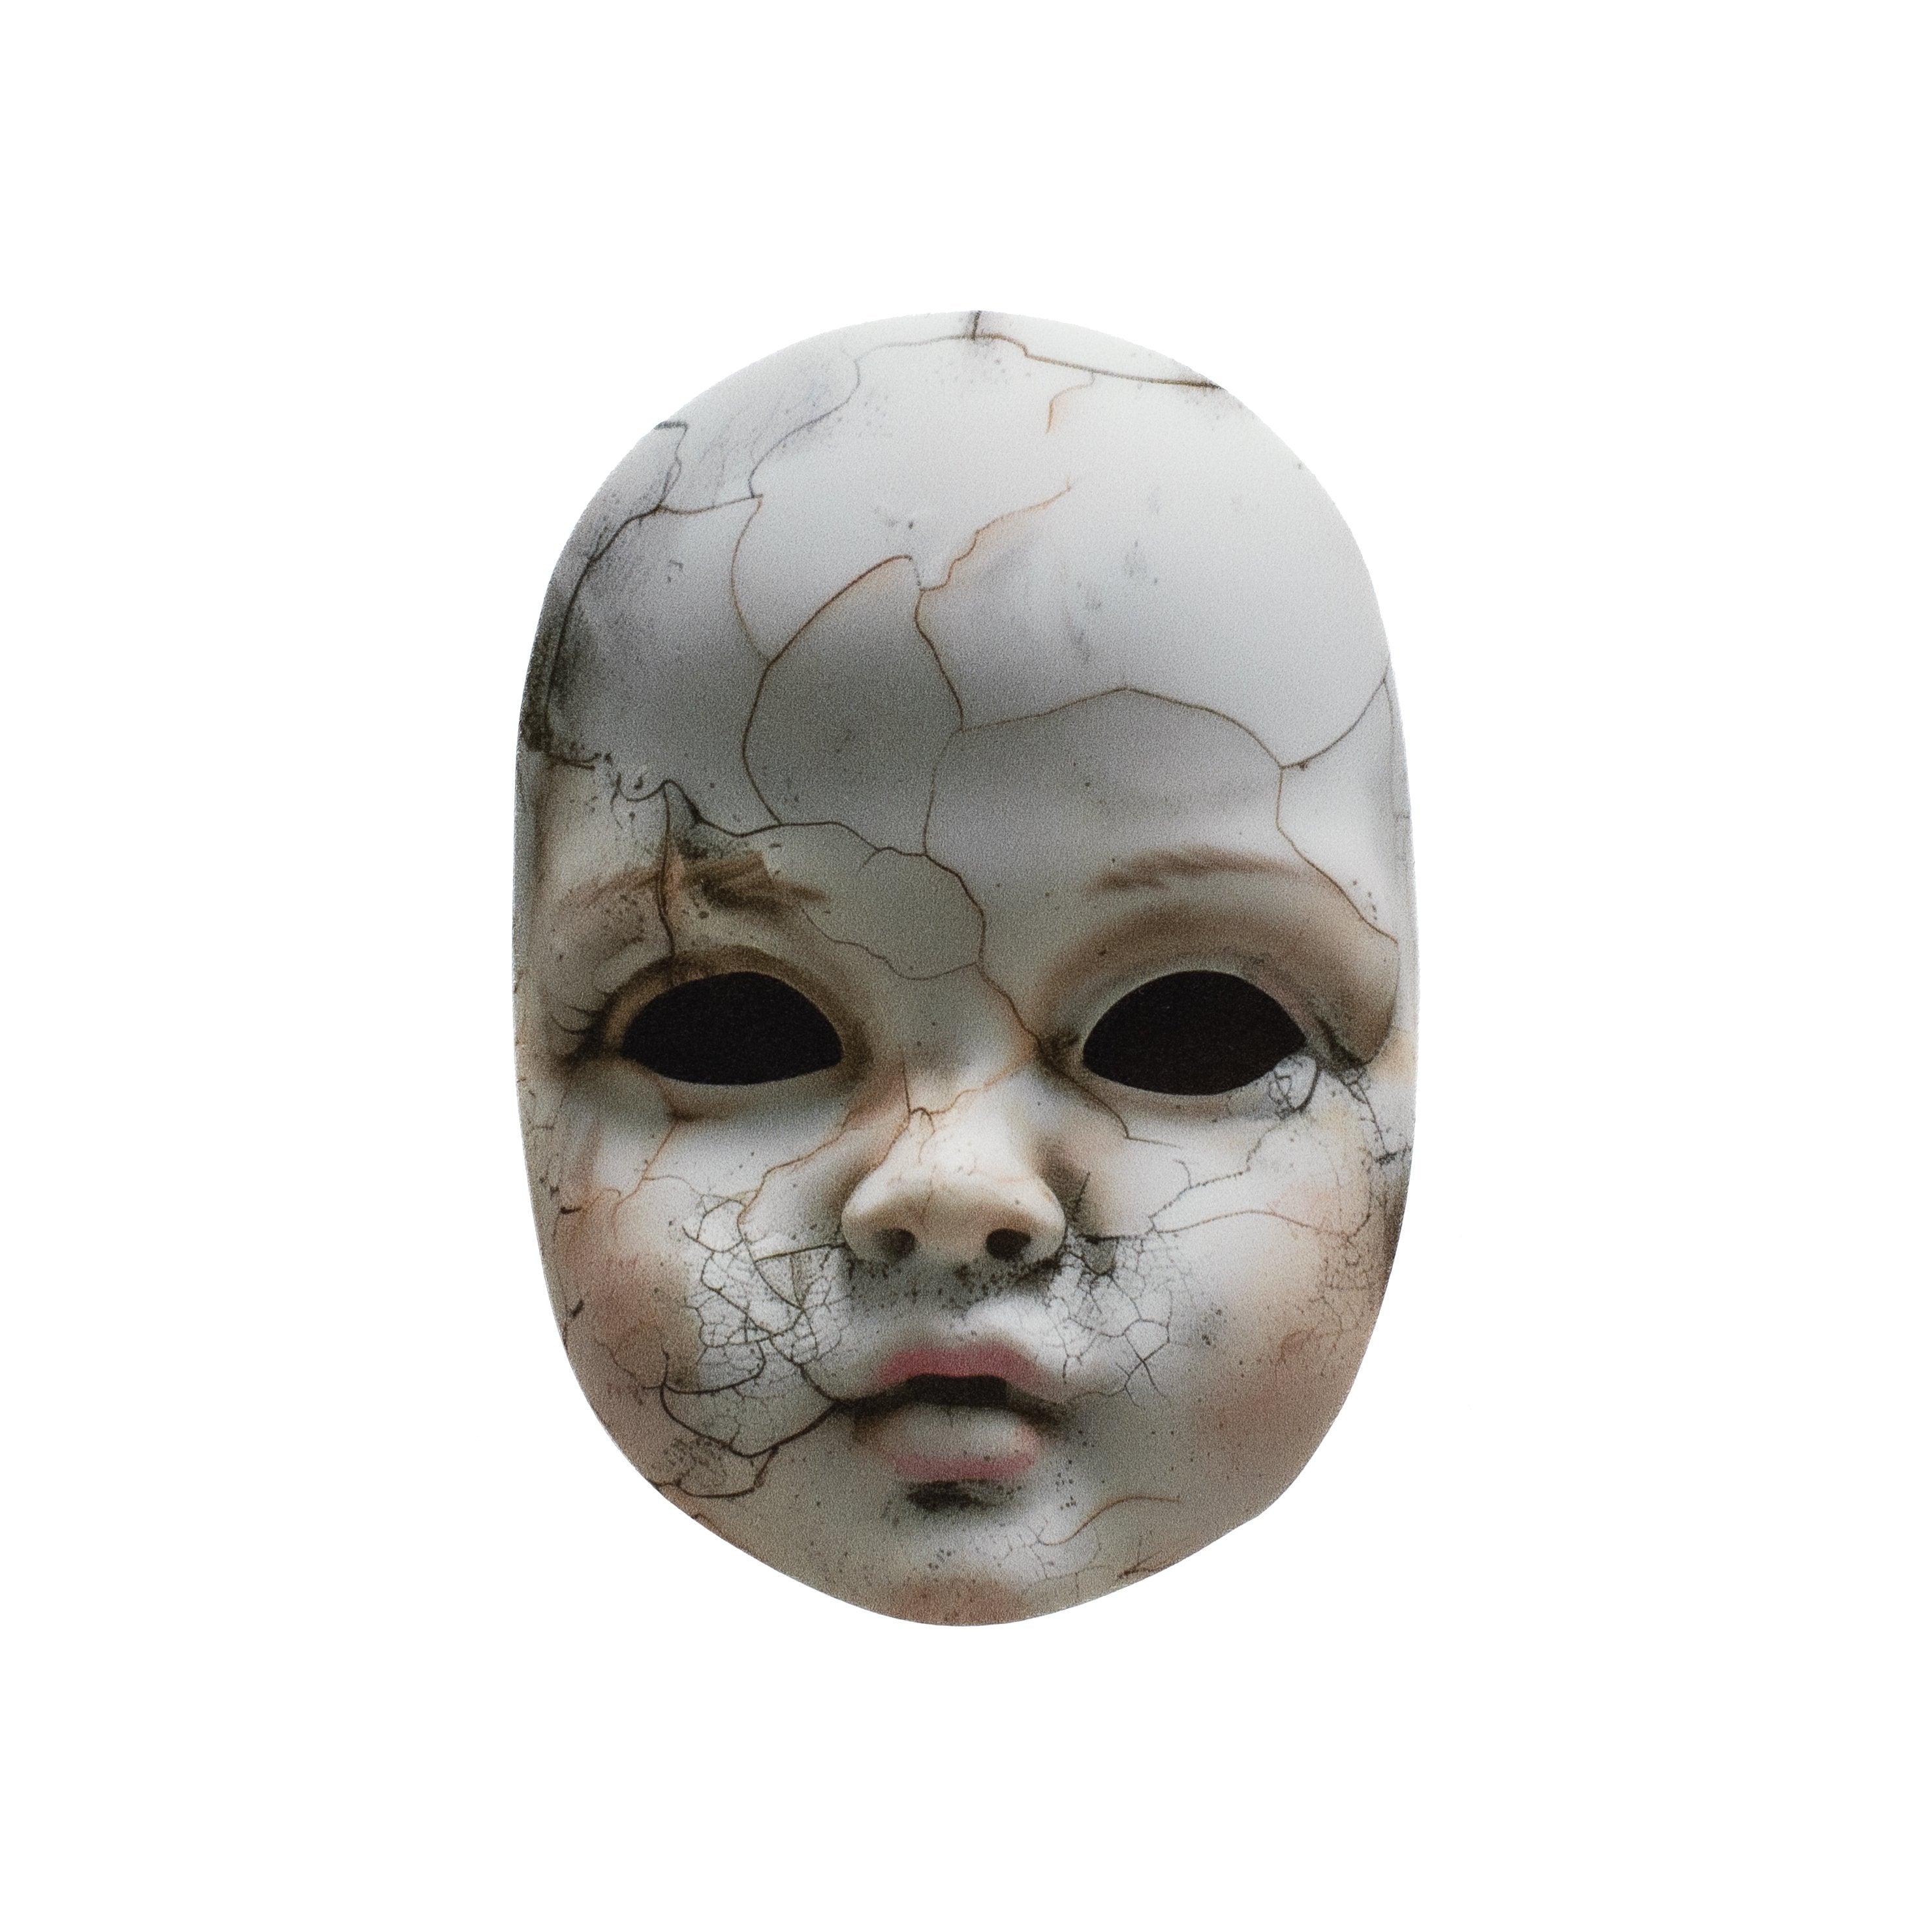 5" Waterproof Accent: Creepy Porcelain Doll Head